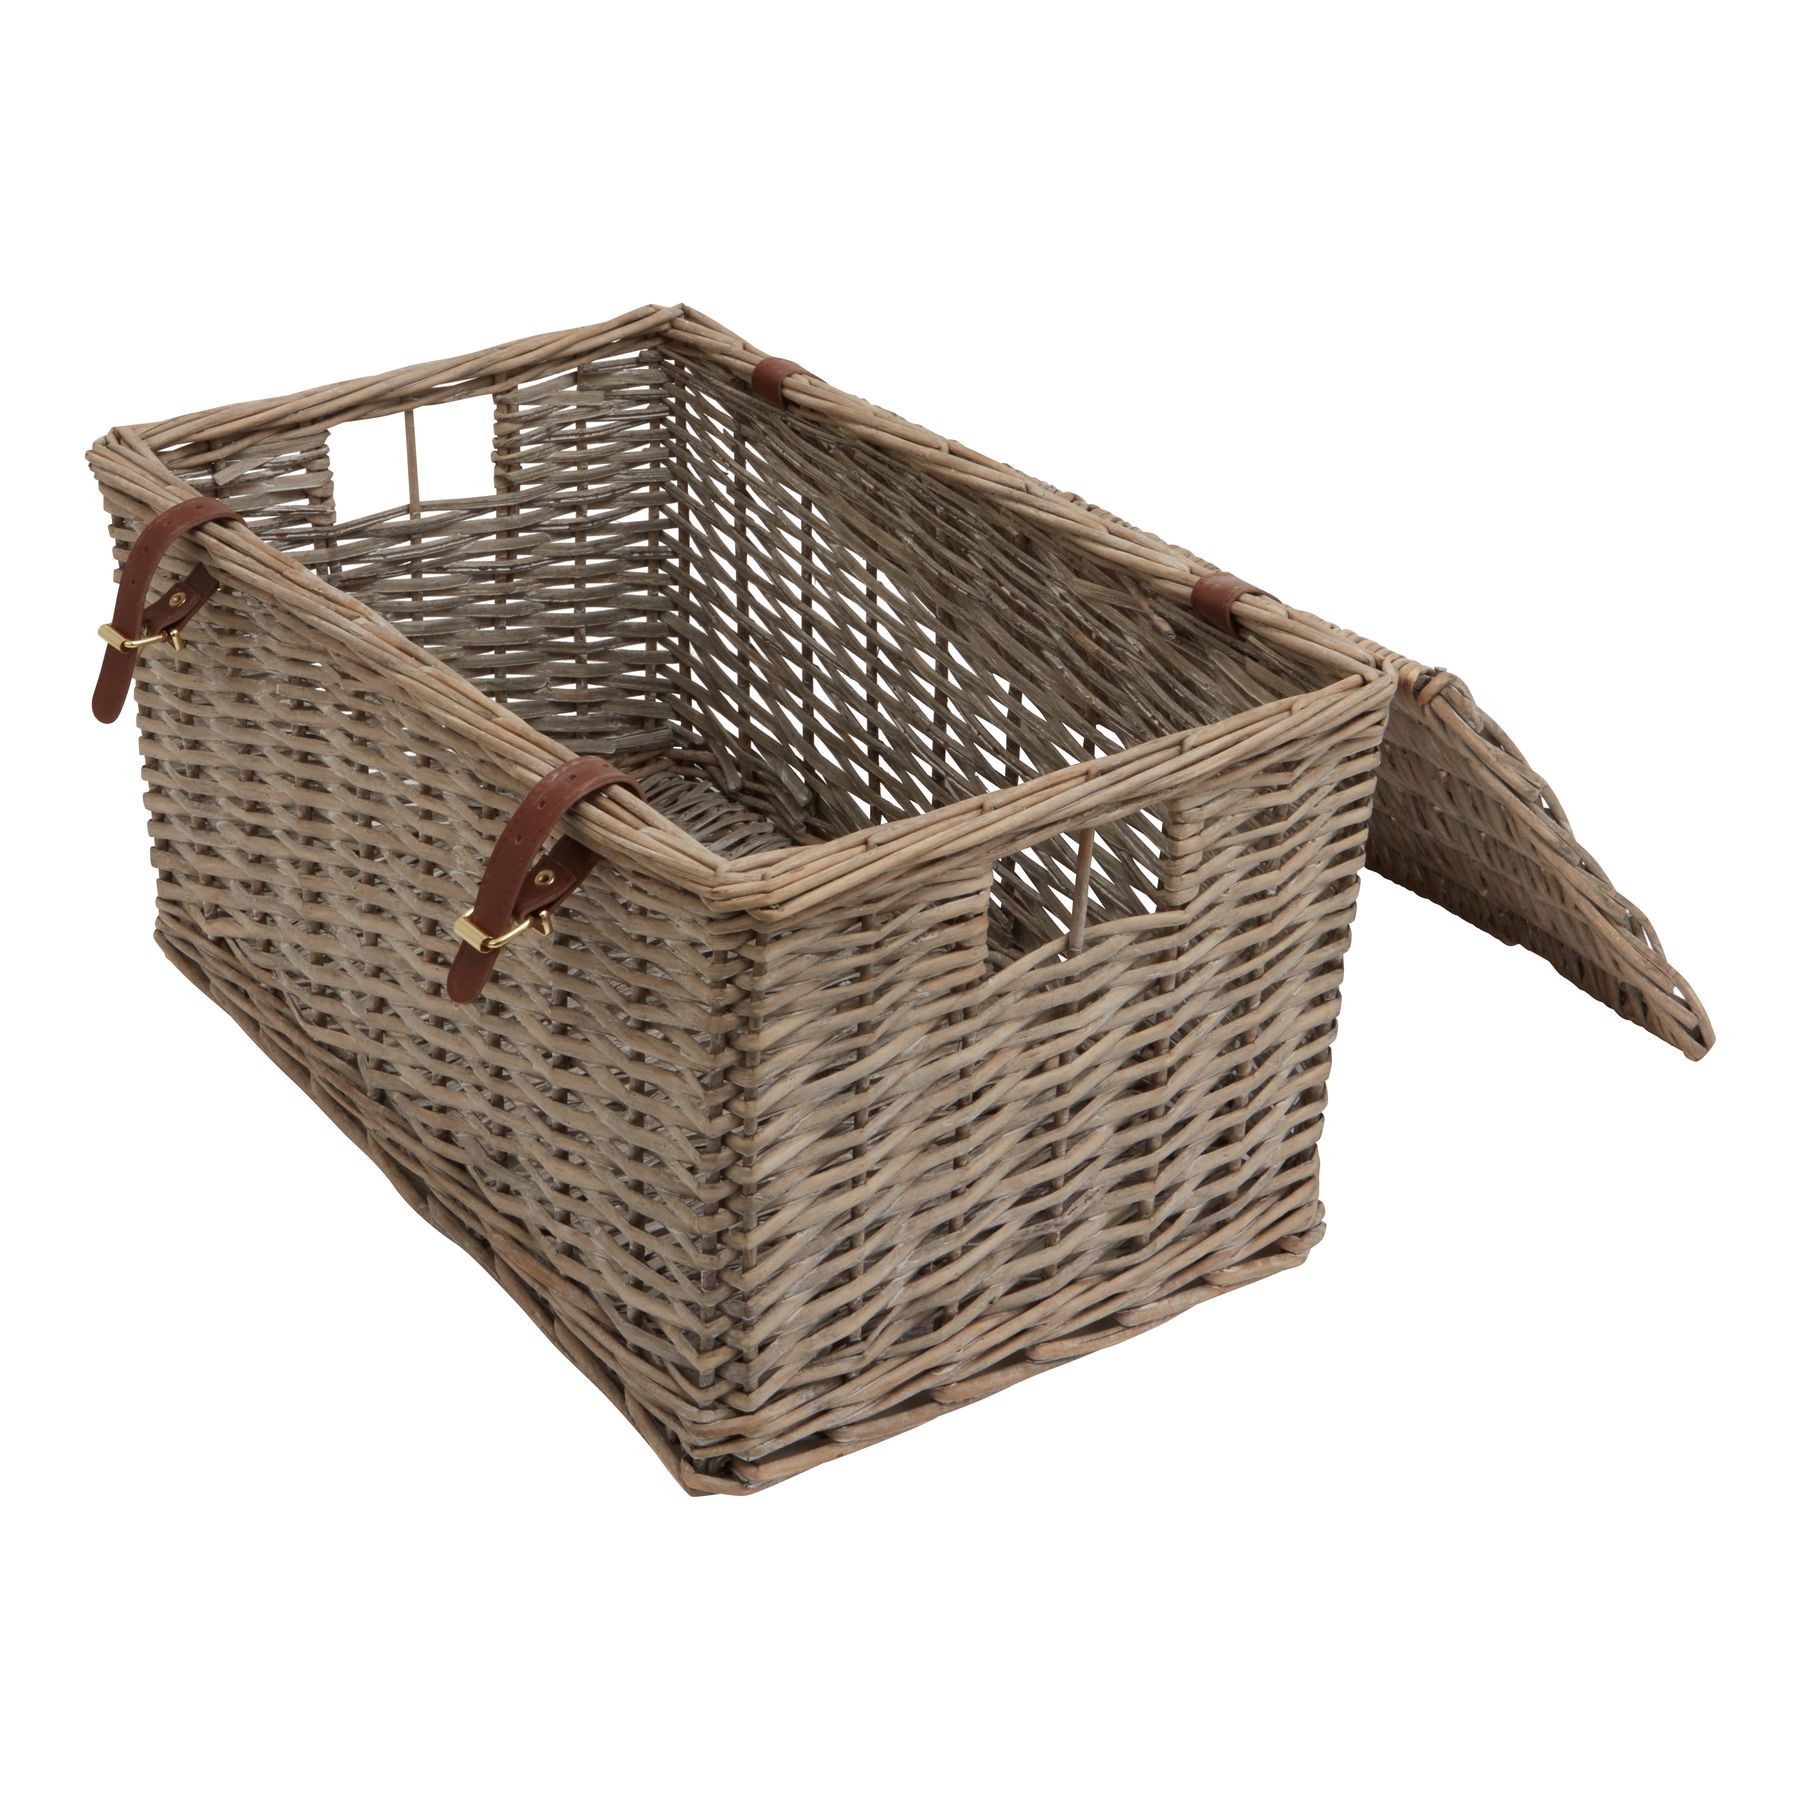 Wicker Hamper Basket - Image 4